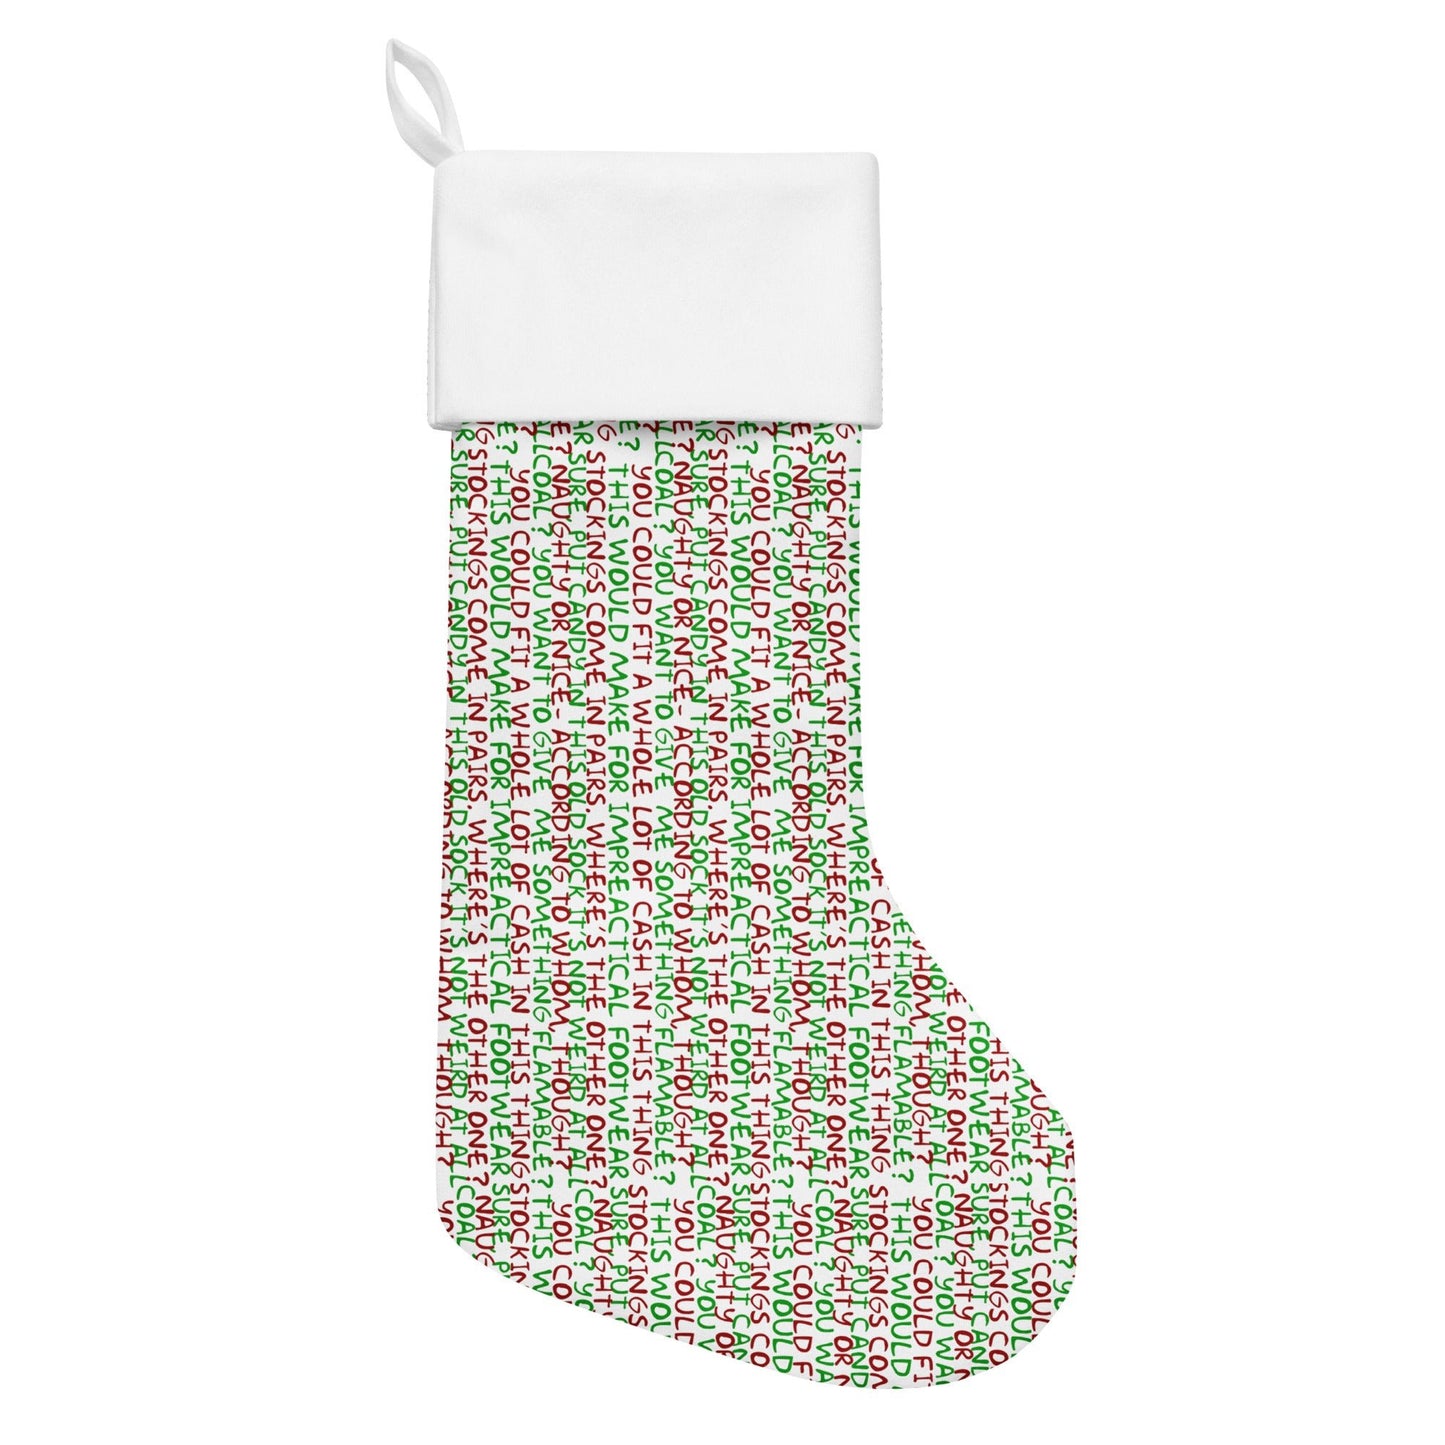 Snarky Christmas stocking - The Nerd Supply Company